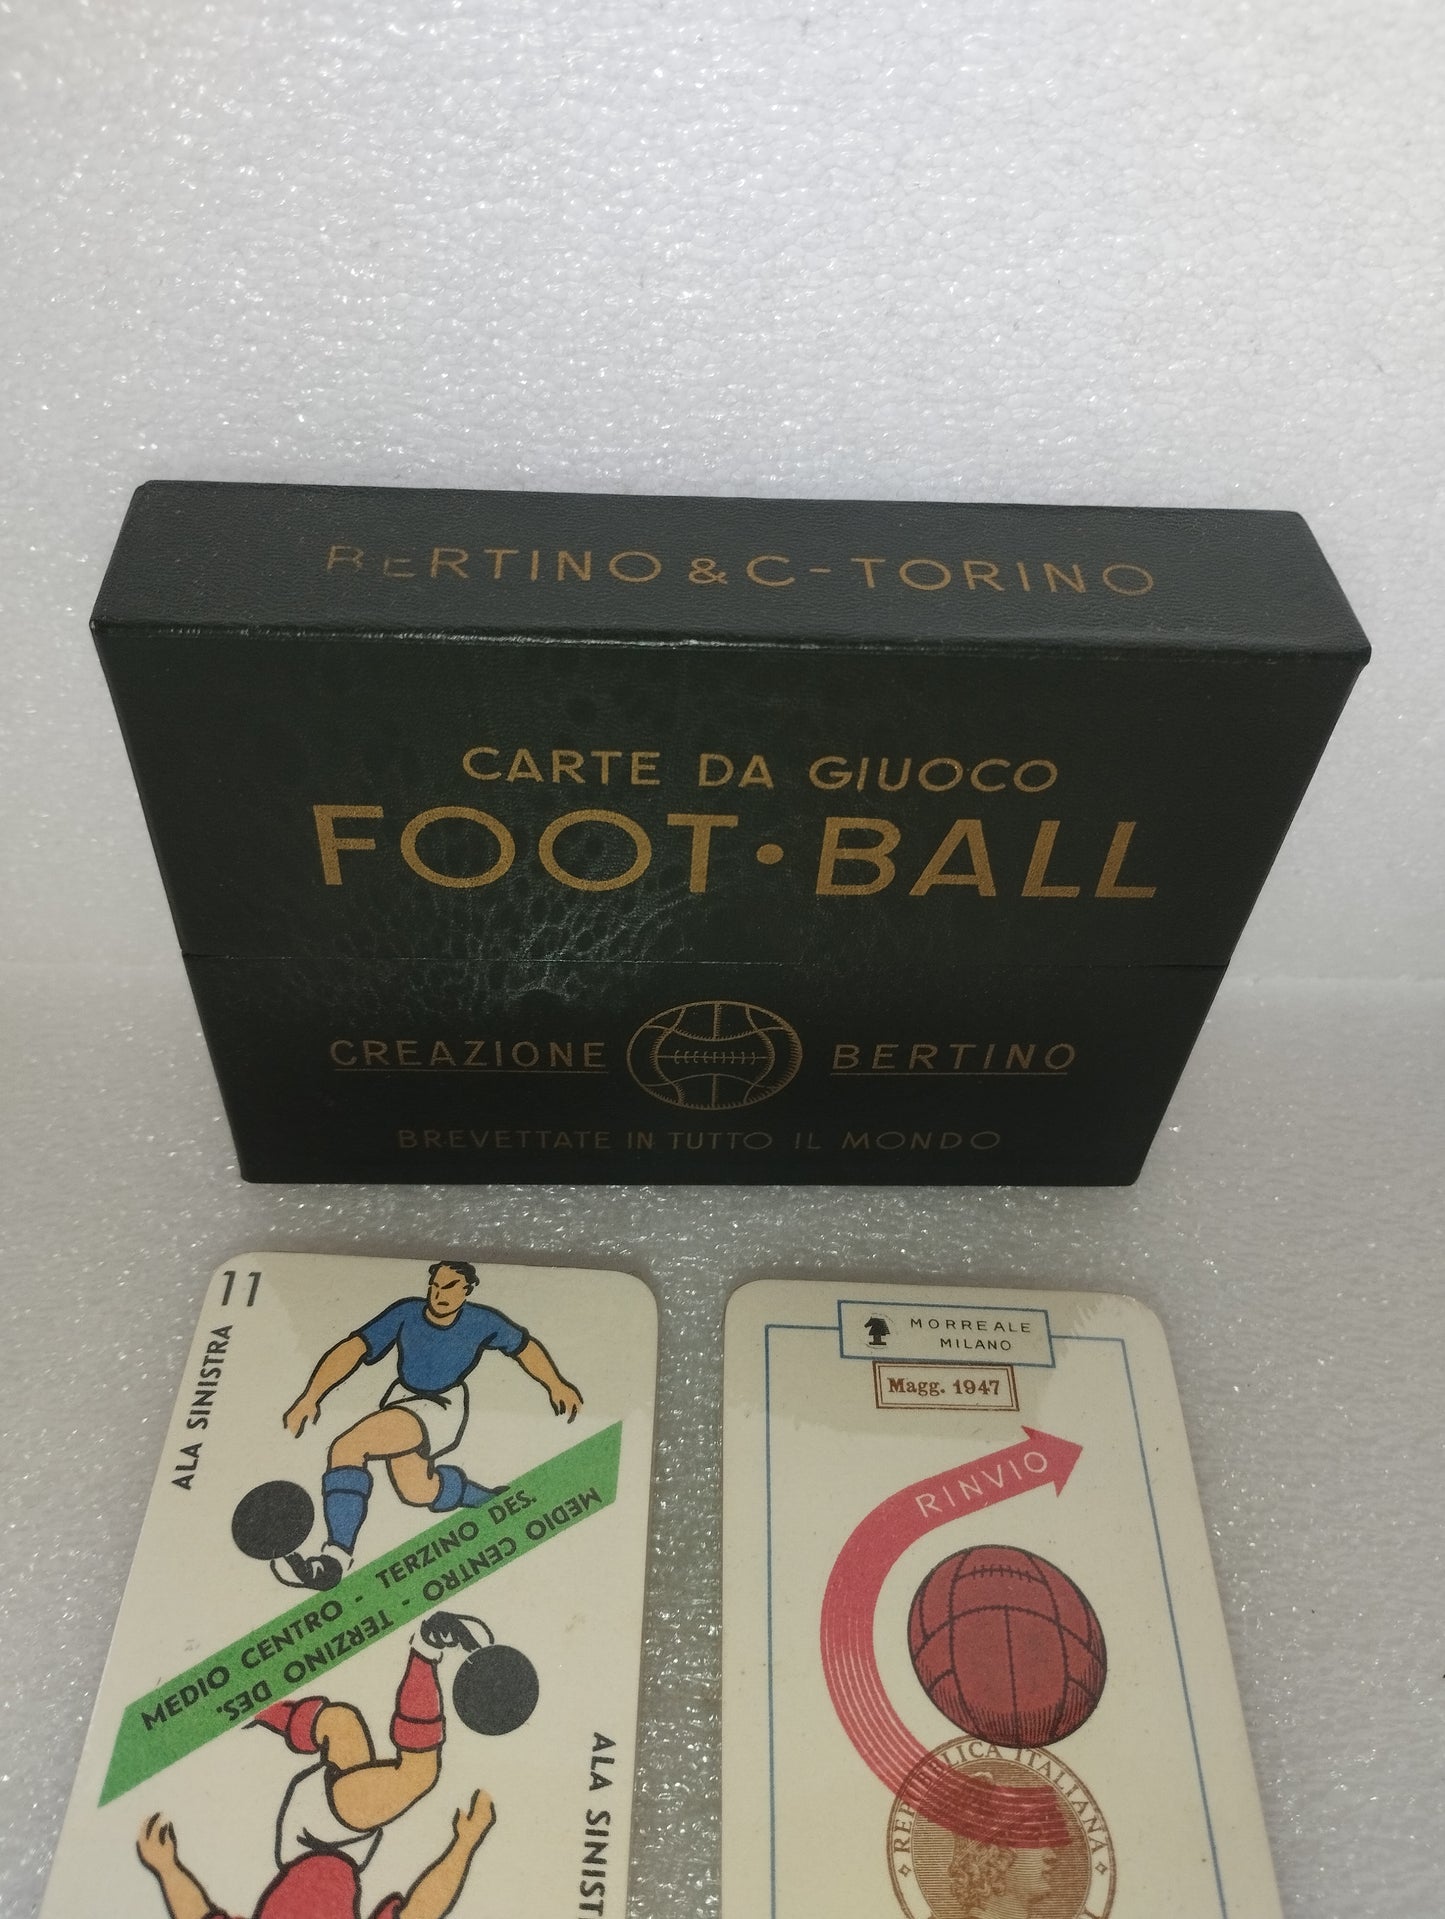 Carte Da Giuoco Football Creazioni Bertino
Anni 40
90 carte